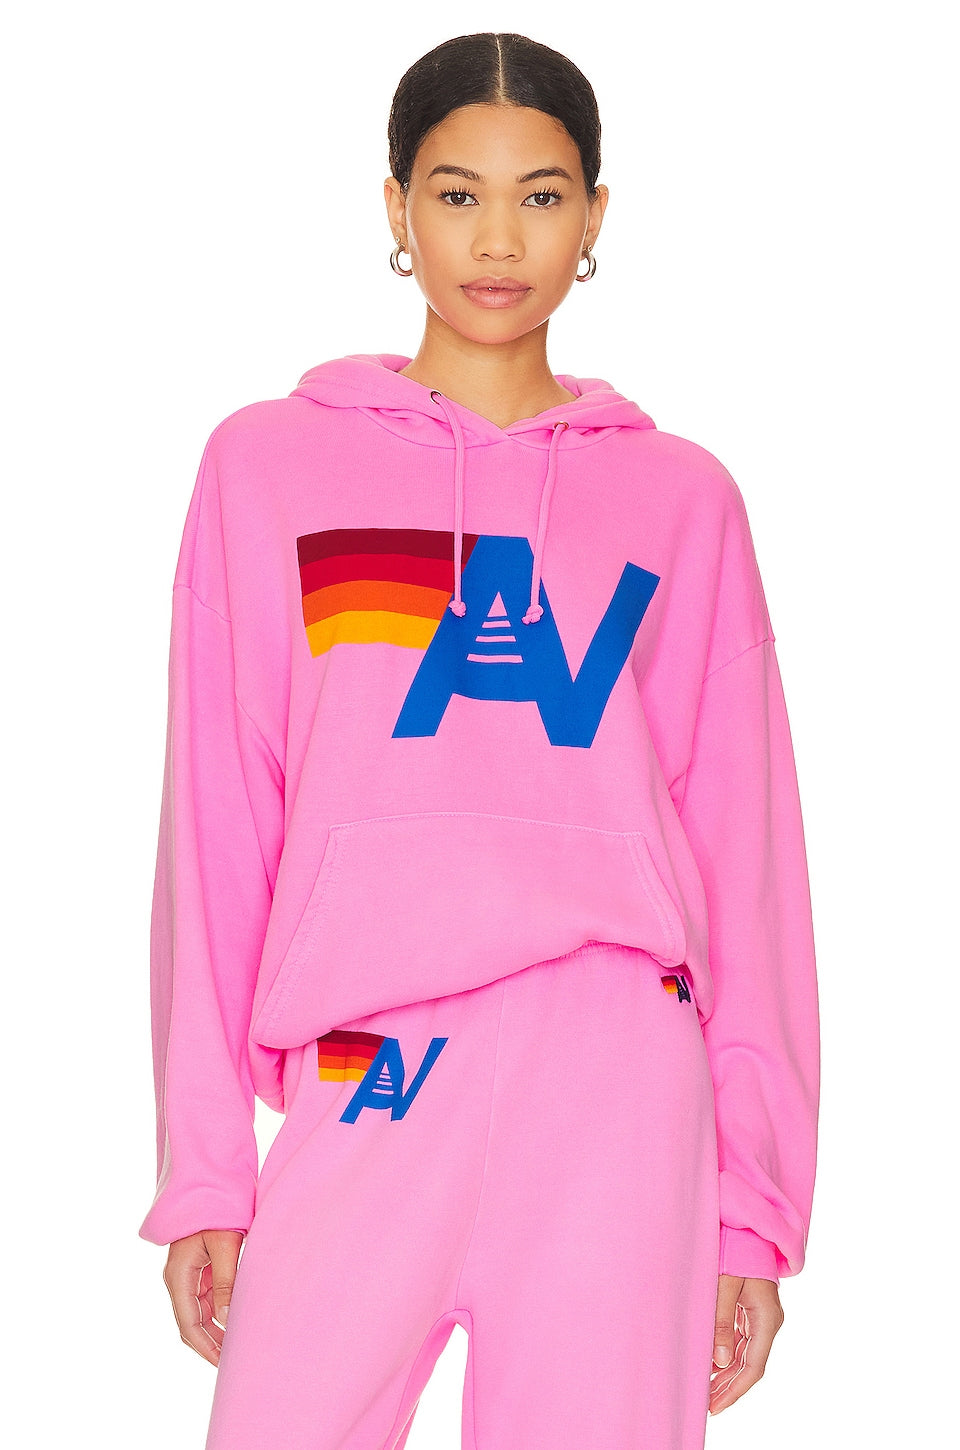 Aviator Nation Logo Pullover Hoodie in Neon Pink Size Medium